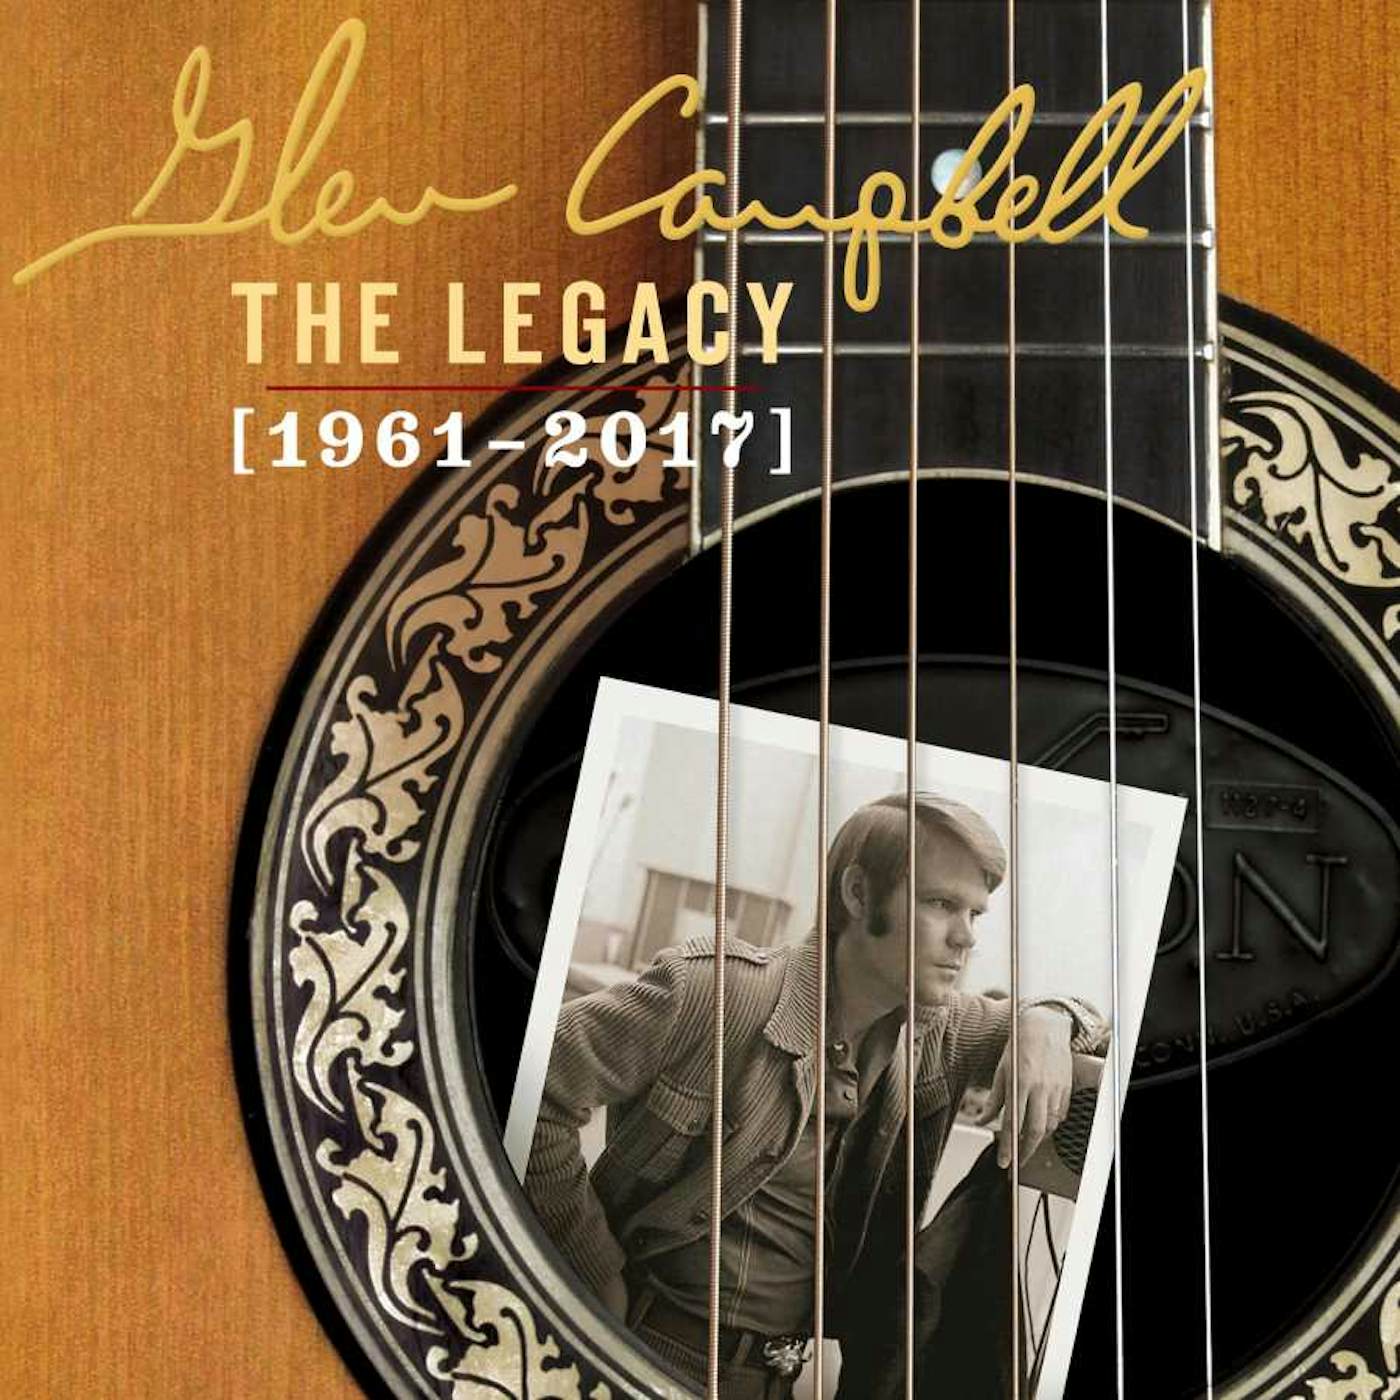 Glen Campbell LEGACY (1961-2017) (4 CD) CD